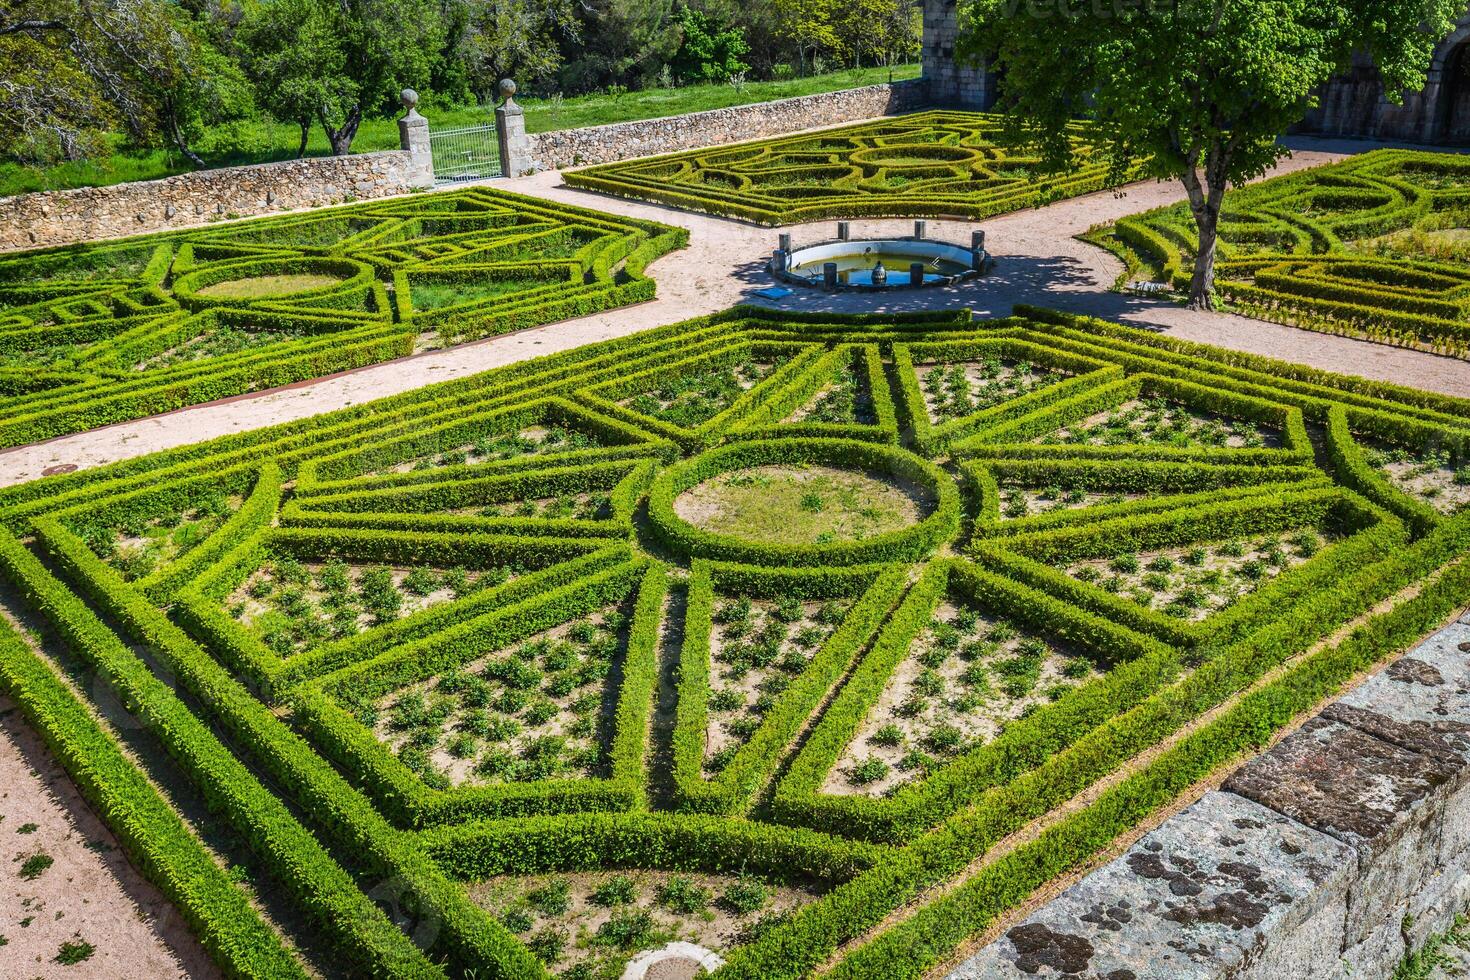 Garden in Castle Escorial at San Lorenzo near Madrid Spain photo